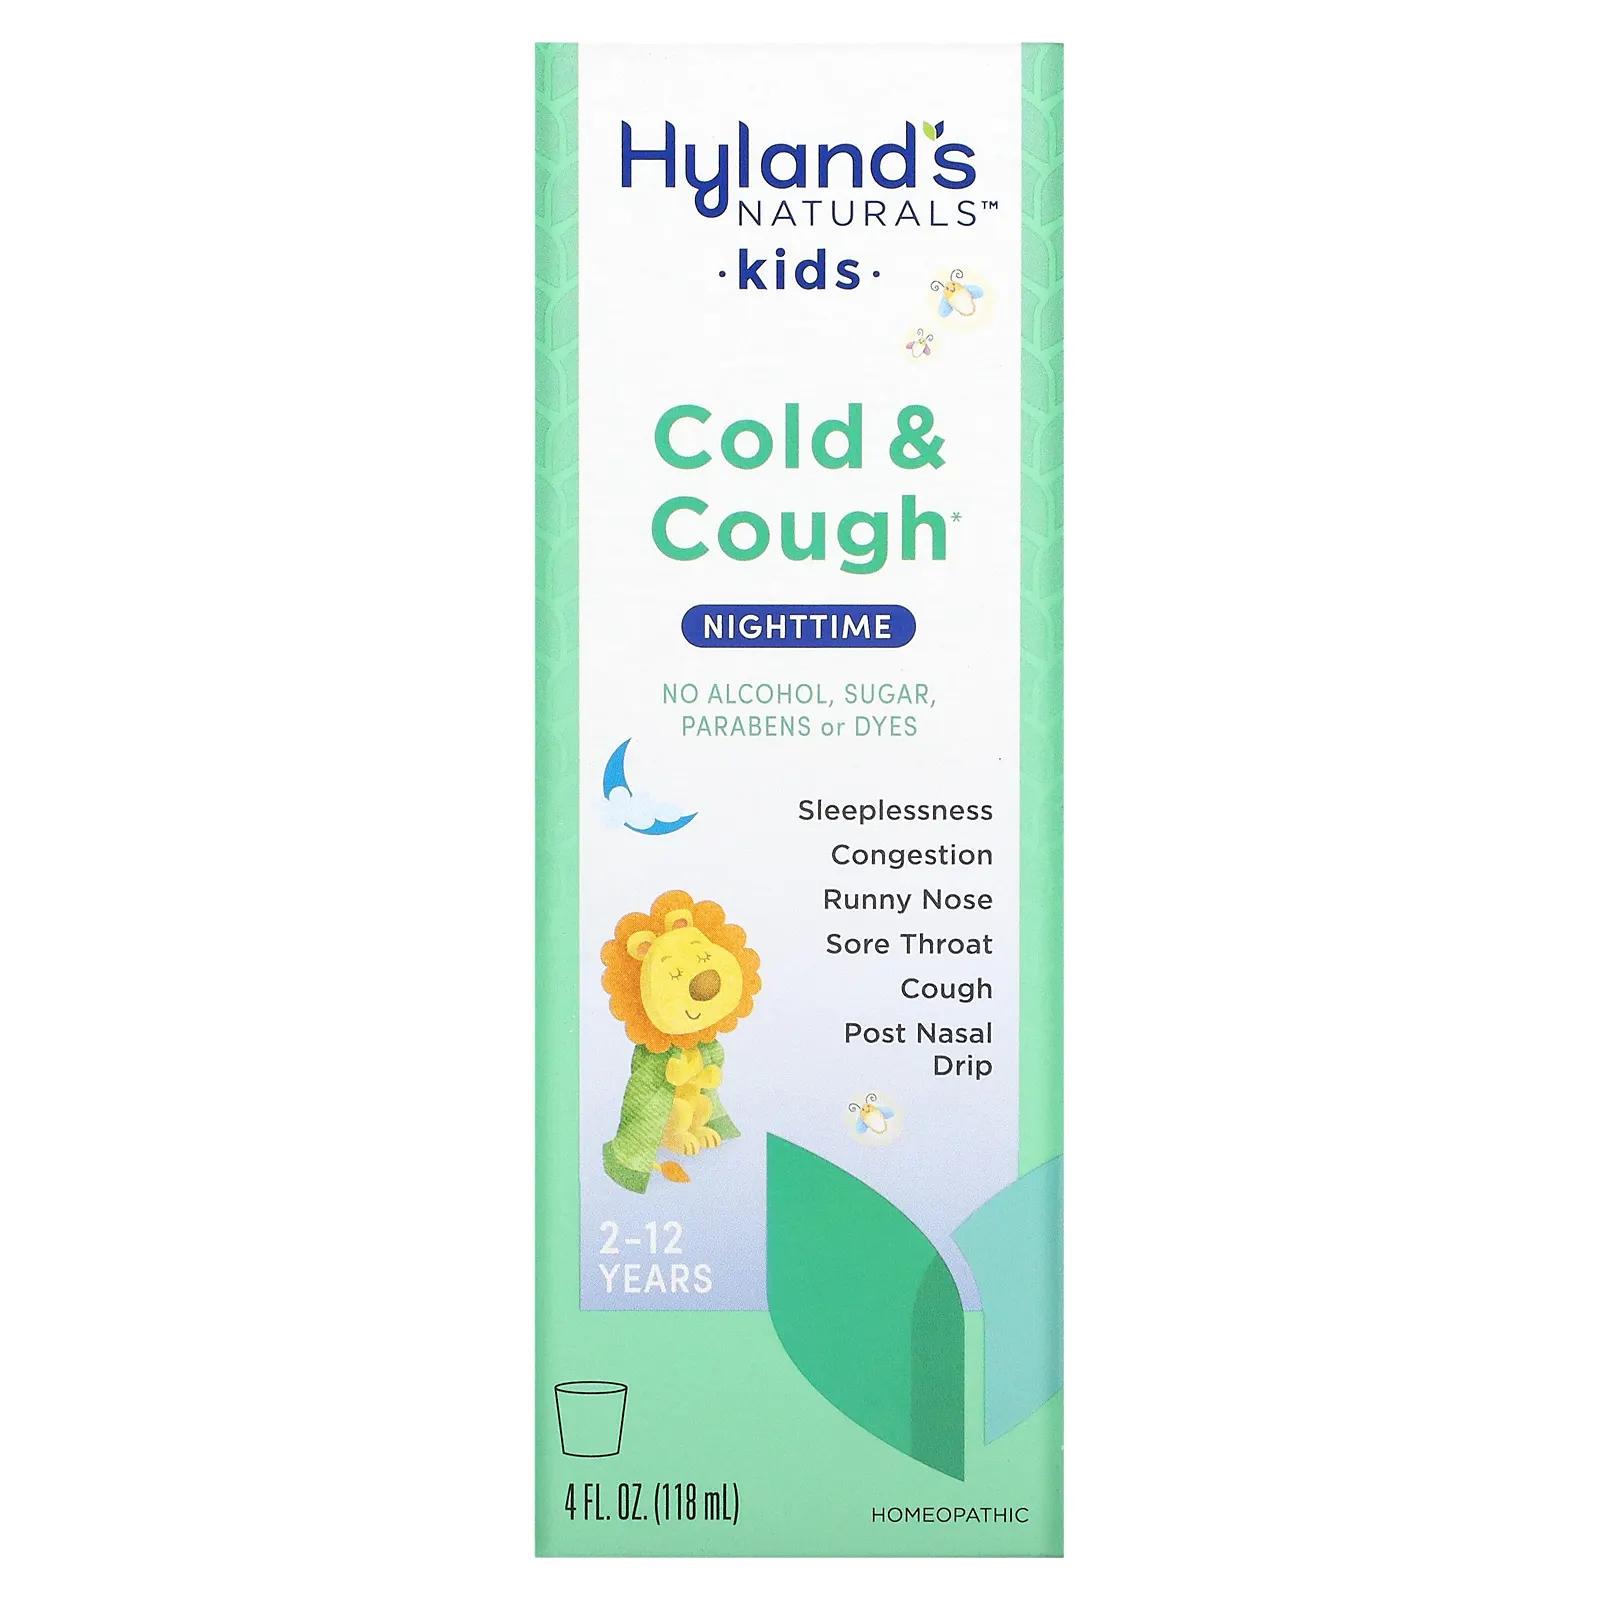 Hyland's Naturals 4 Kids Cold 'n Cough Nighttime Ages 2-12 4 fl oz (118 ml) hyland s 4 kids sore throat 2 12 years 4 fl oz 118 ml